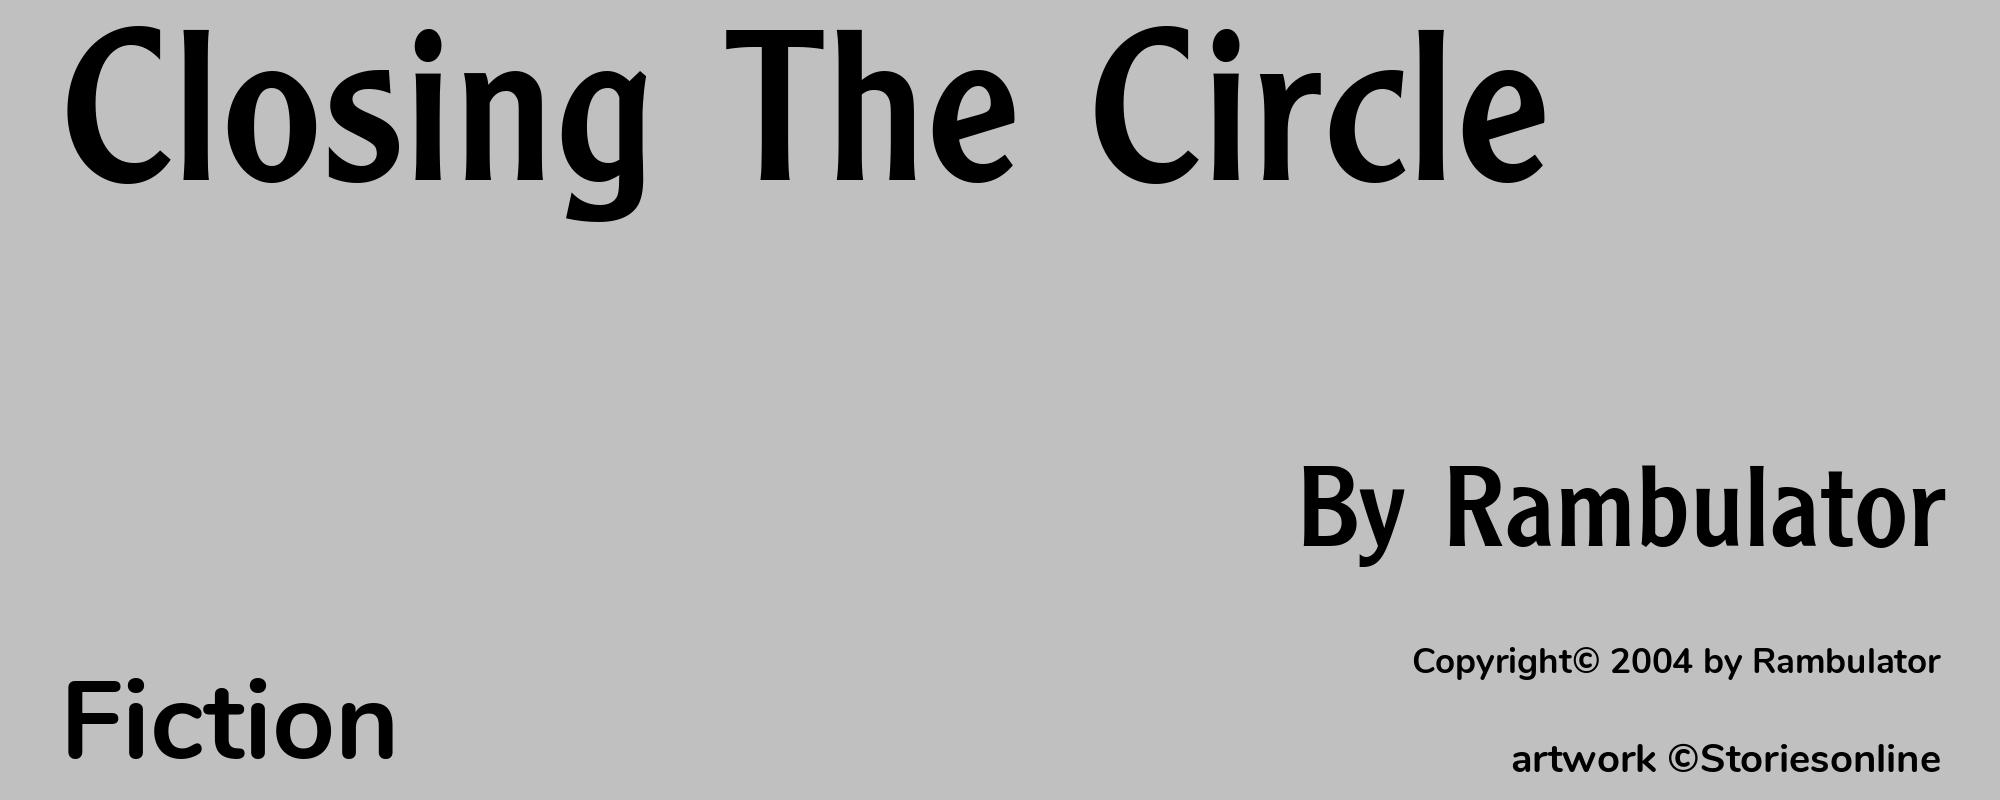 Closing The Circle - Cover